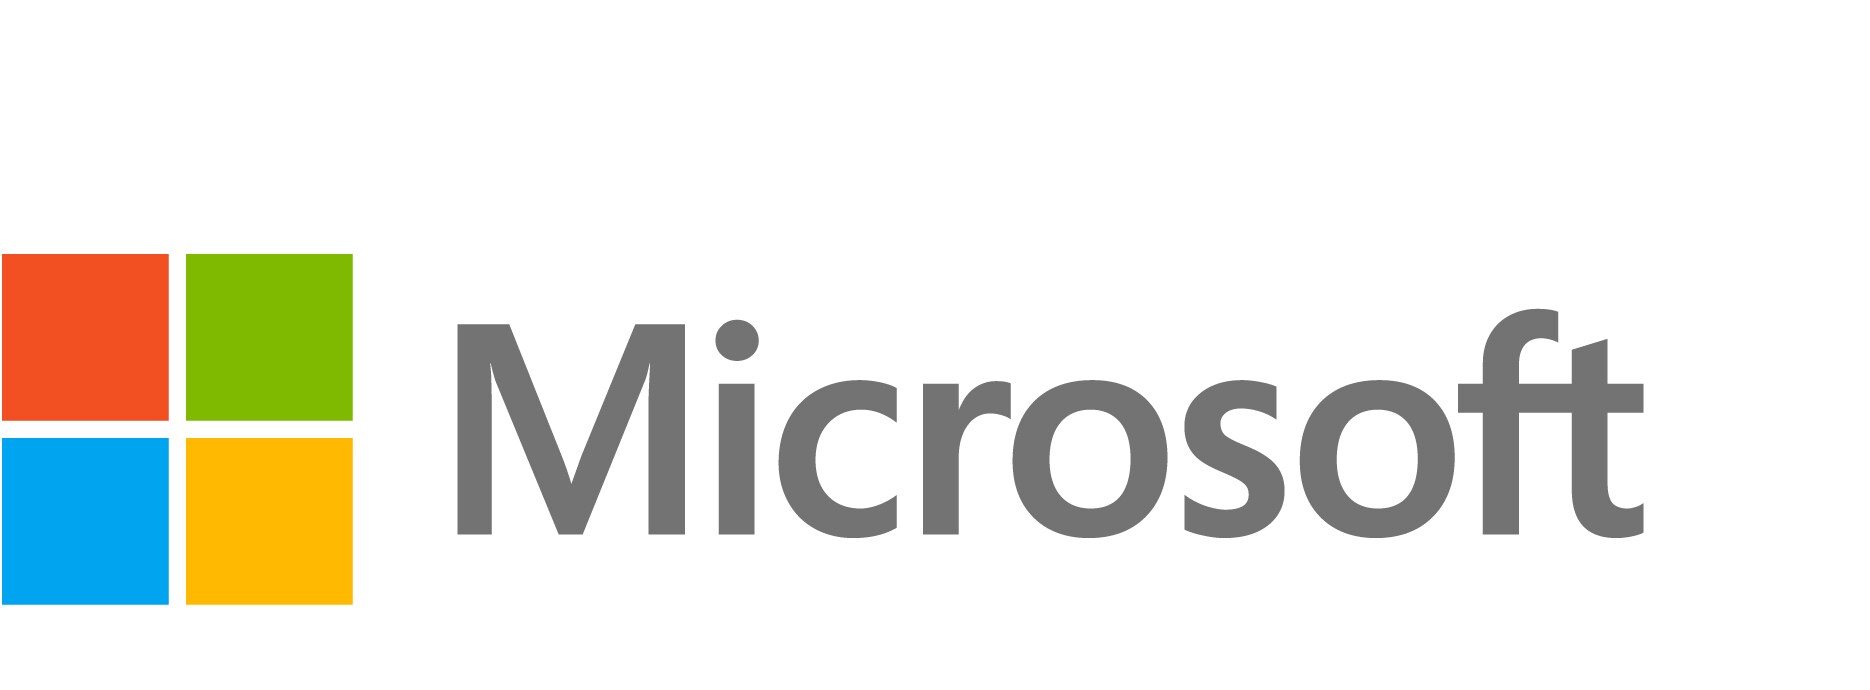 Microsoft Windows Remote Desktop Services - software assurance - 1 user CAL